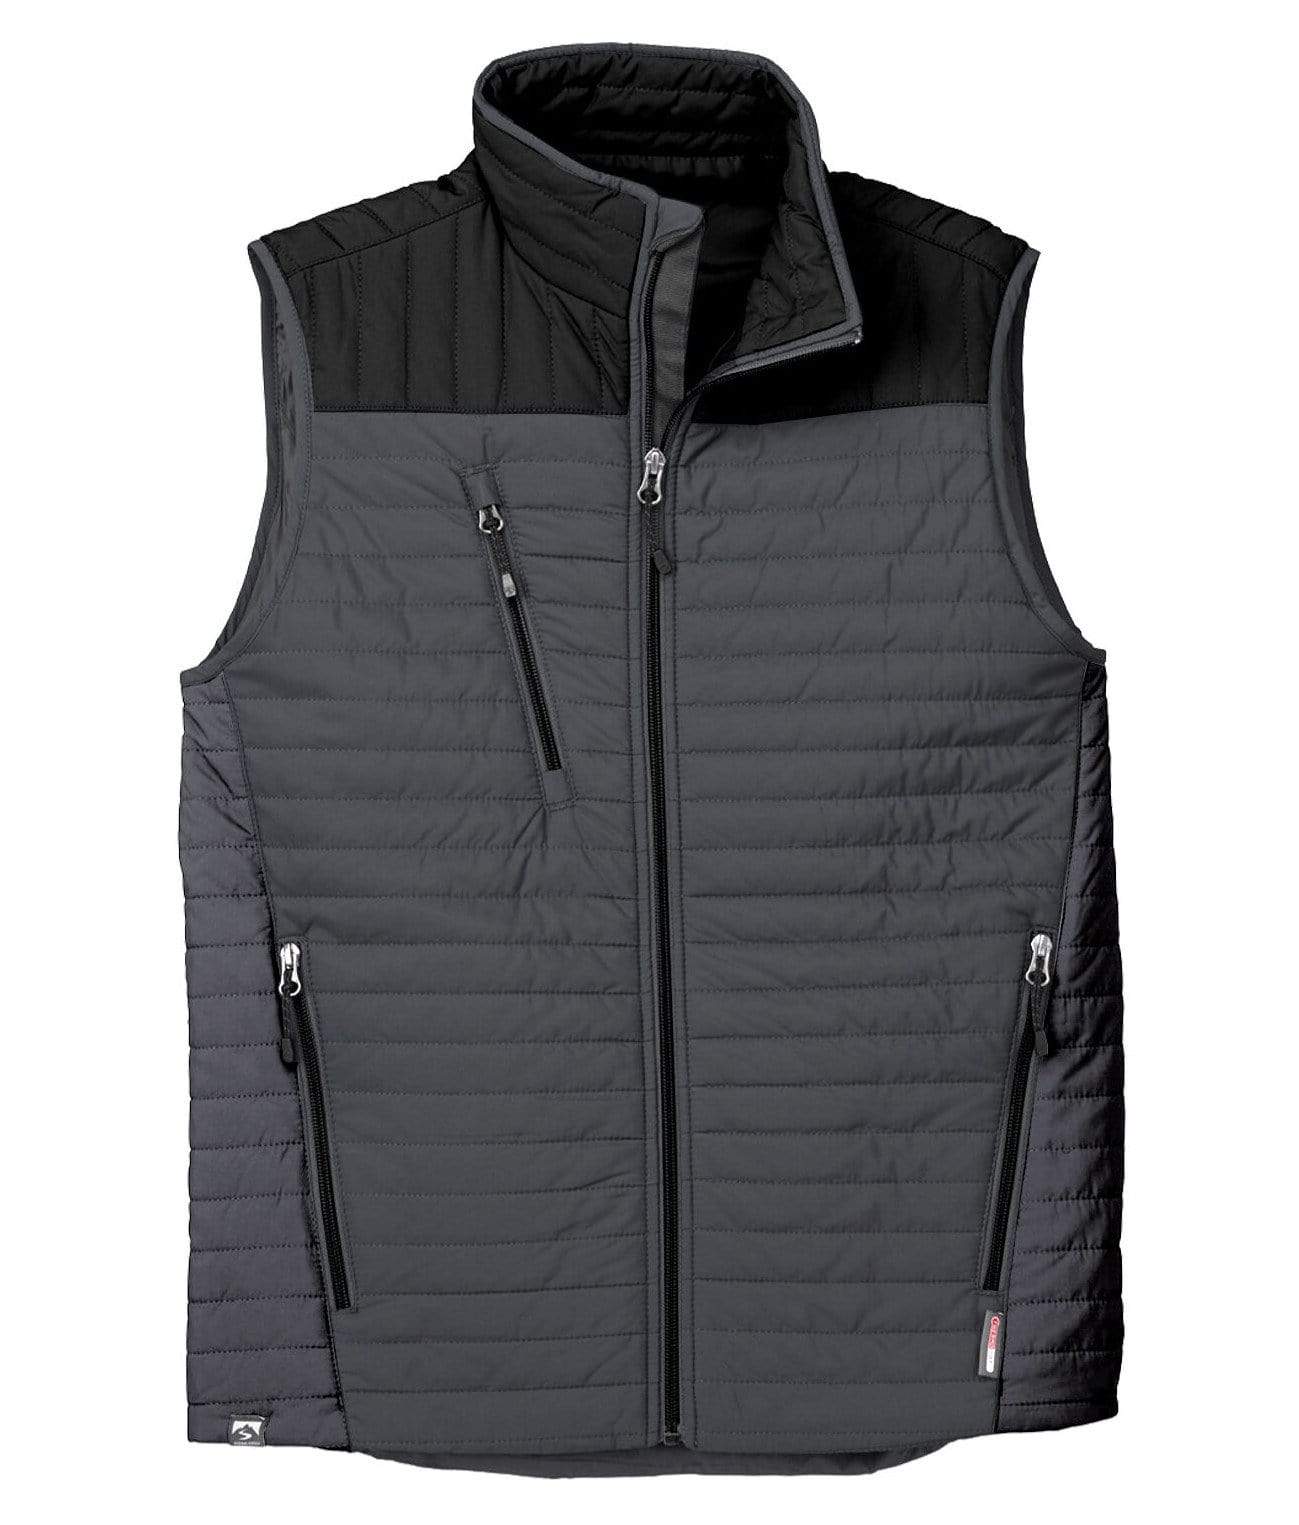 Storm Creek Outerwear S / Jet/Black Storm Creek - Men's Front Runner Vest